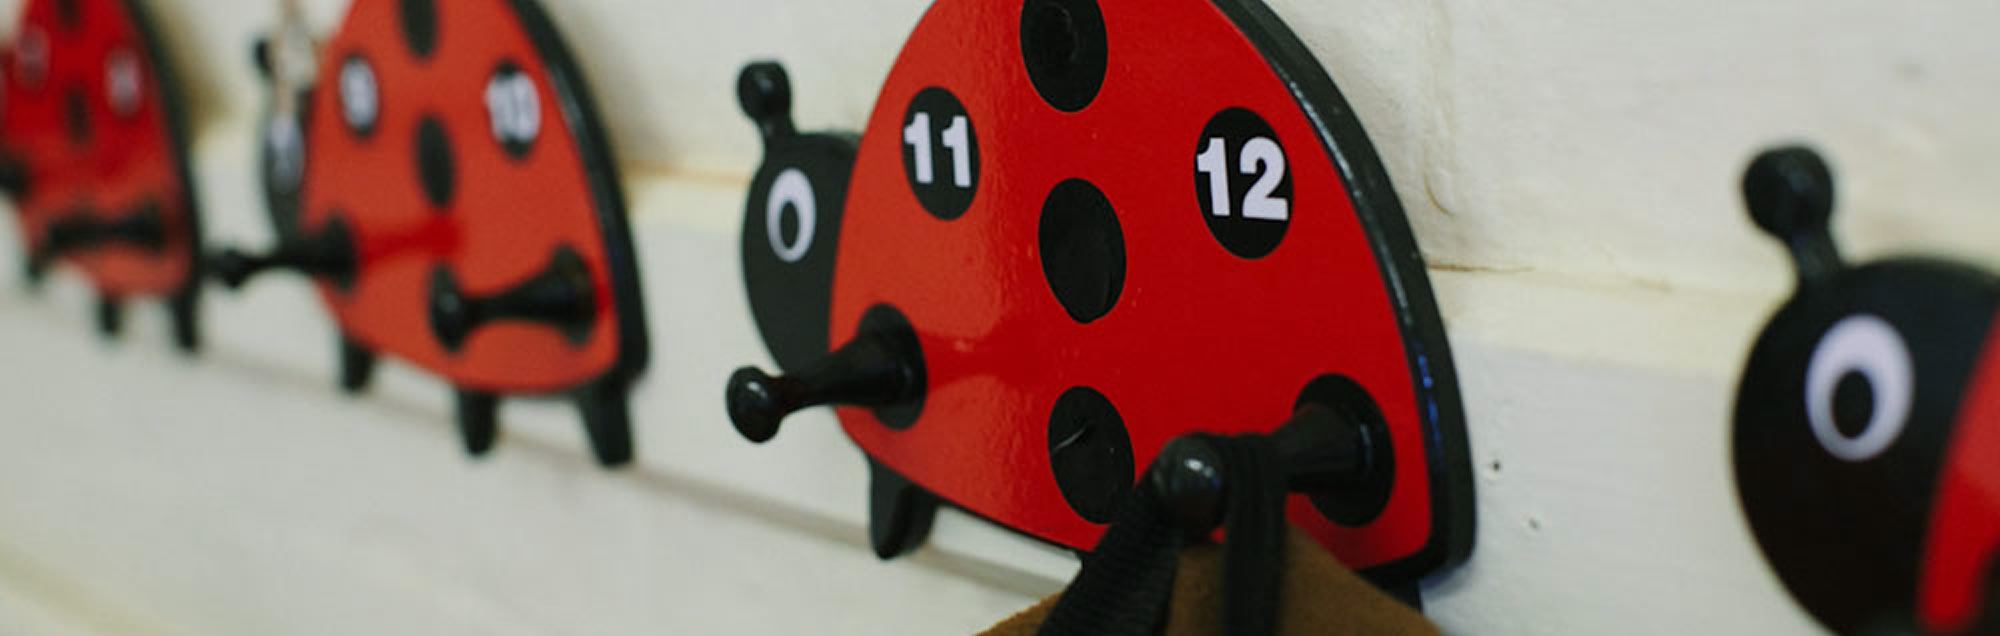 ladybird preschool img1a